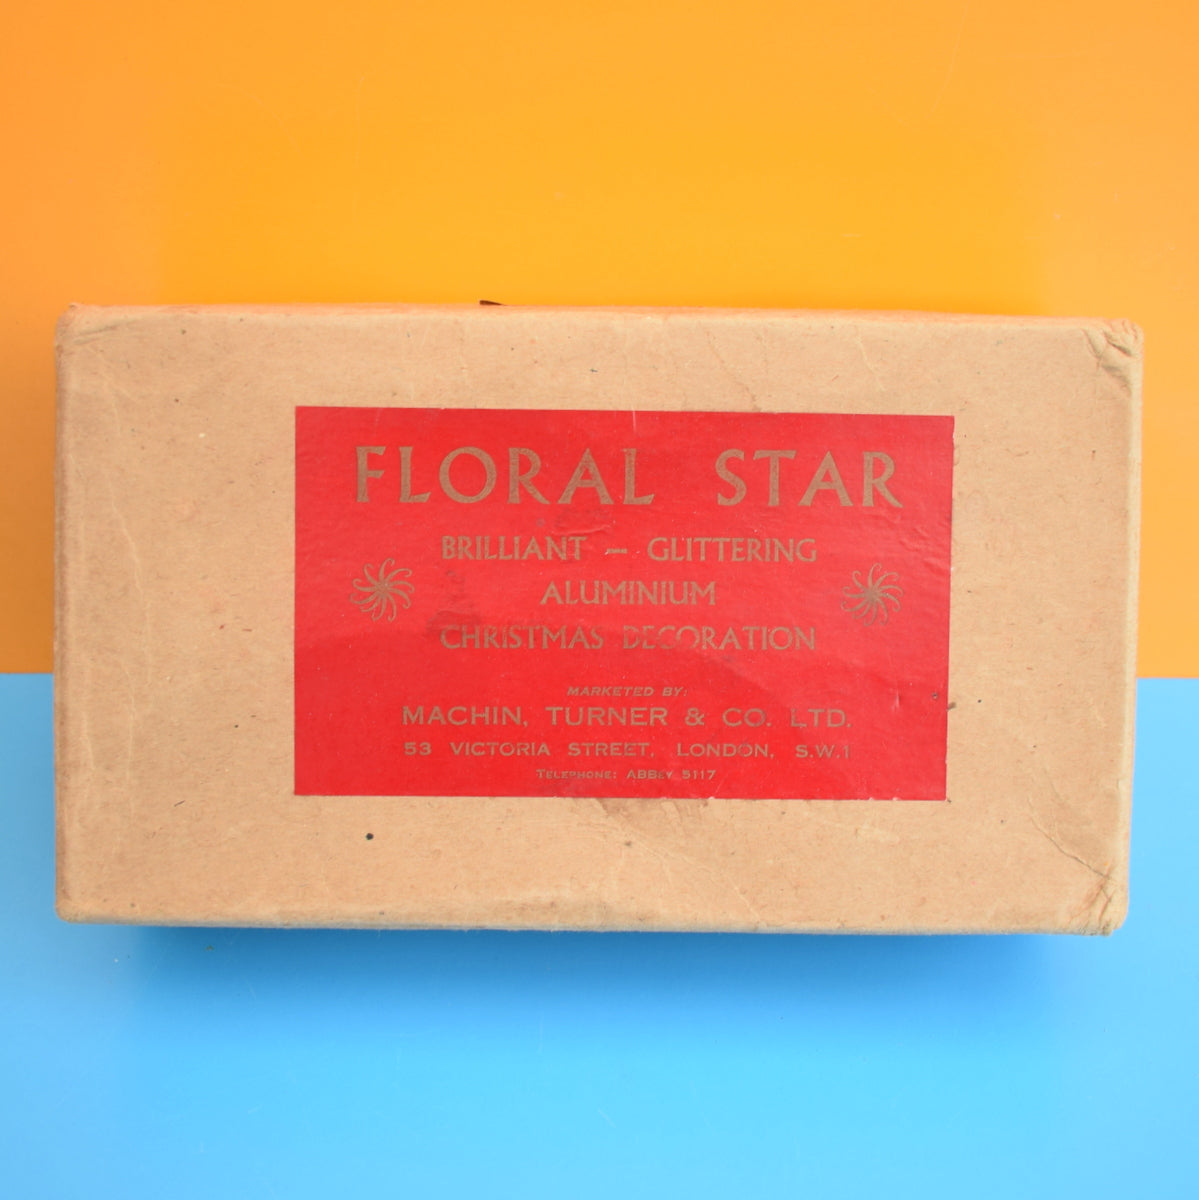 Vintage 1950s Aluminium Glittering Floral Star Decoration - Boxed